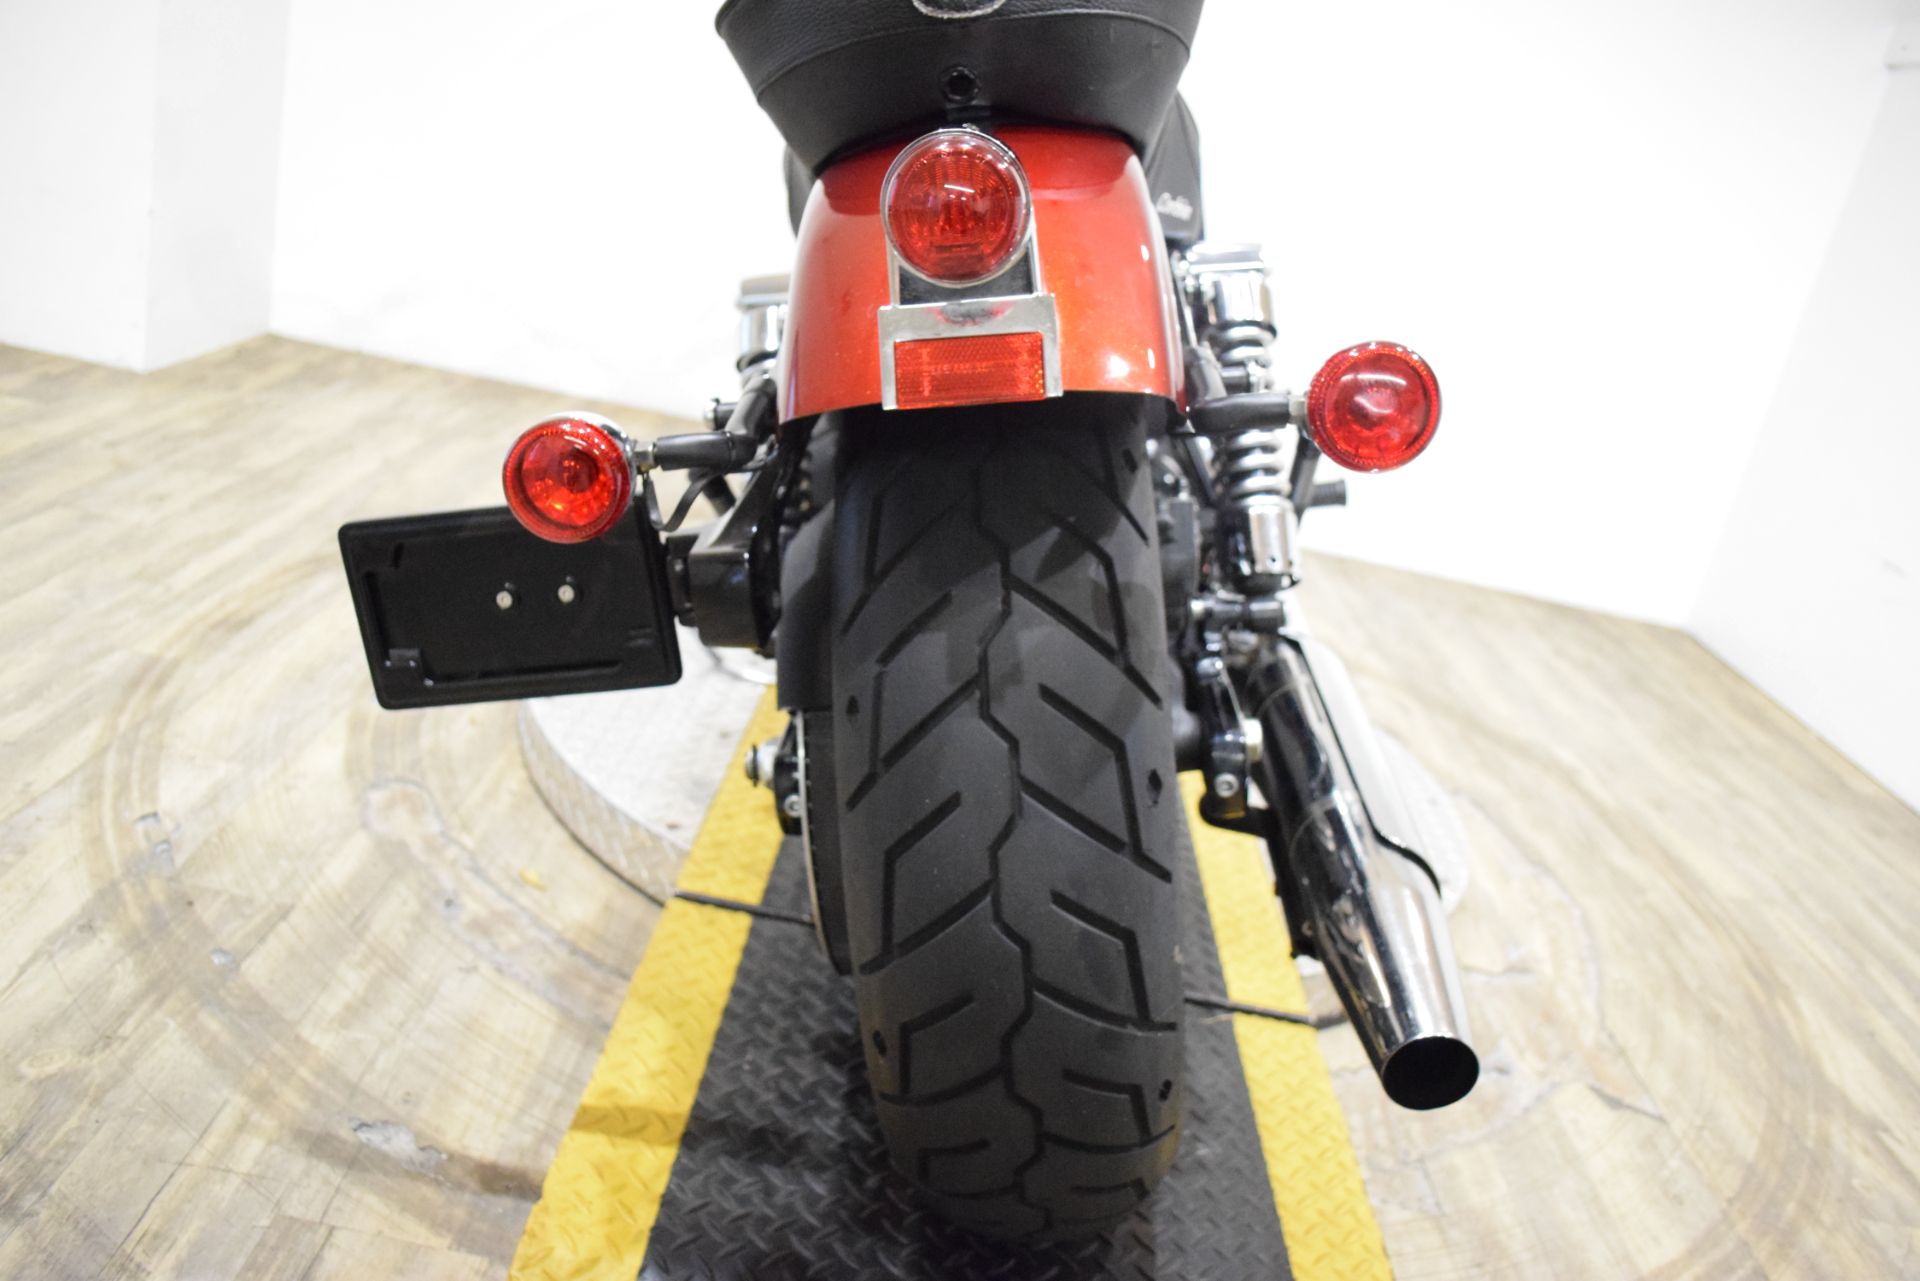 2010 Harley-Davidson Dyna® Street Bob® in Wauconda, Illinois - Photo 25